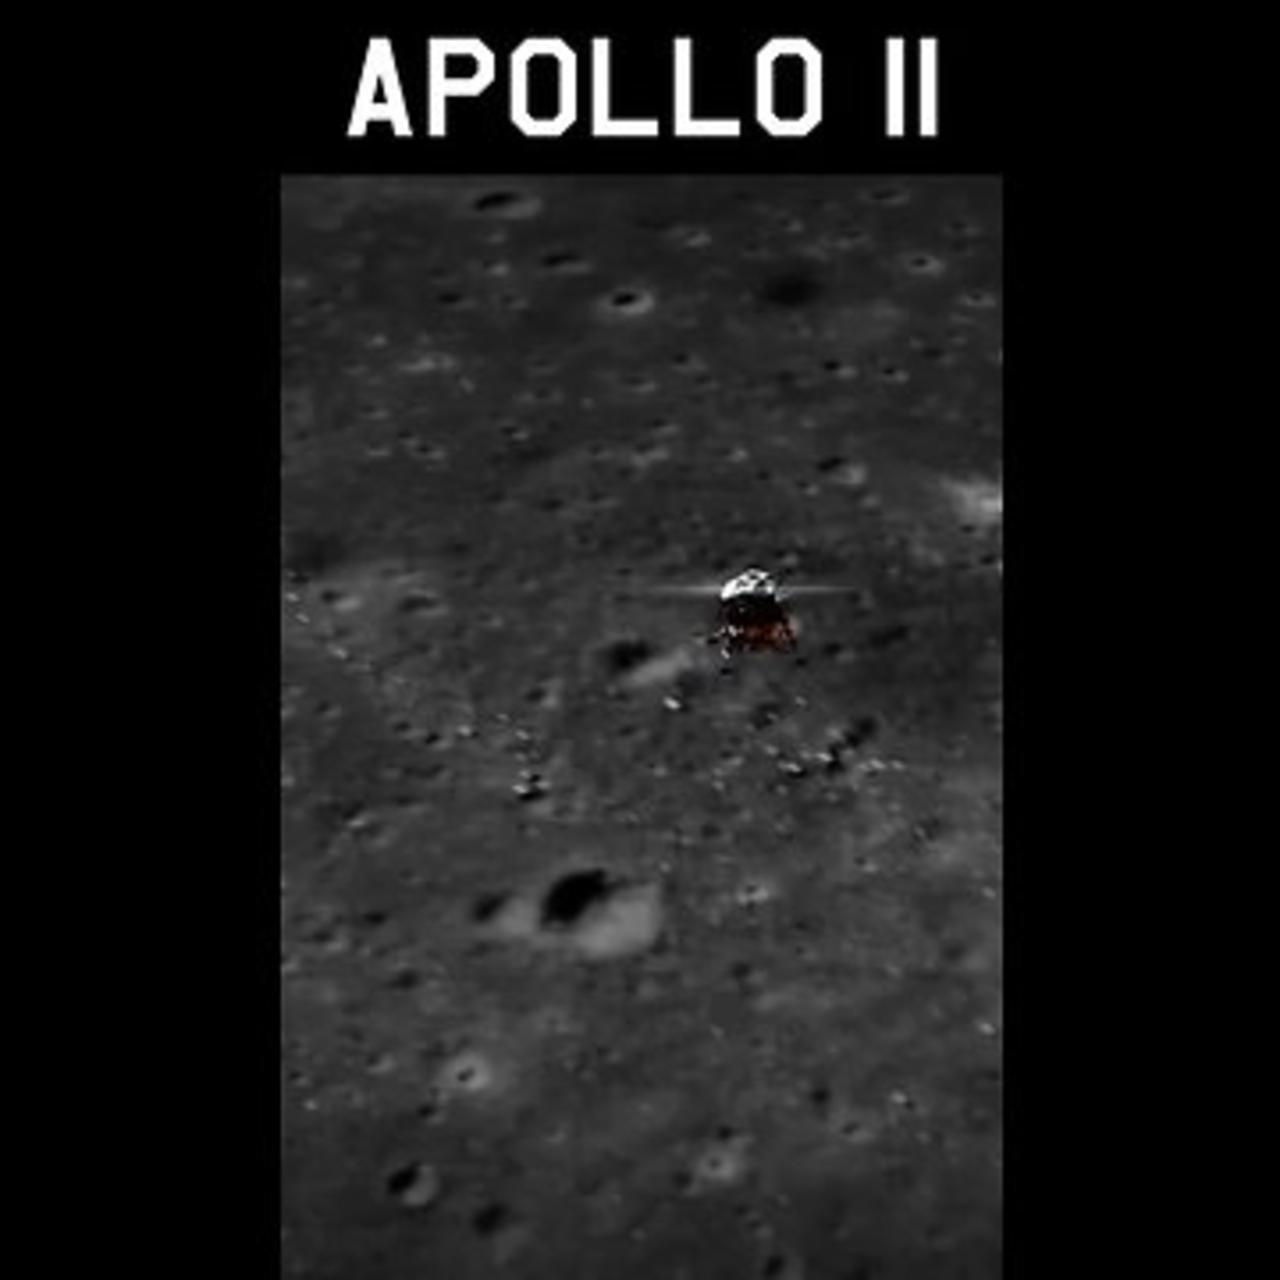 APOLLO 11 Moon landing